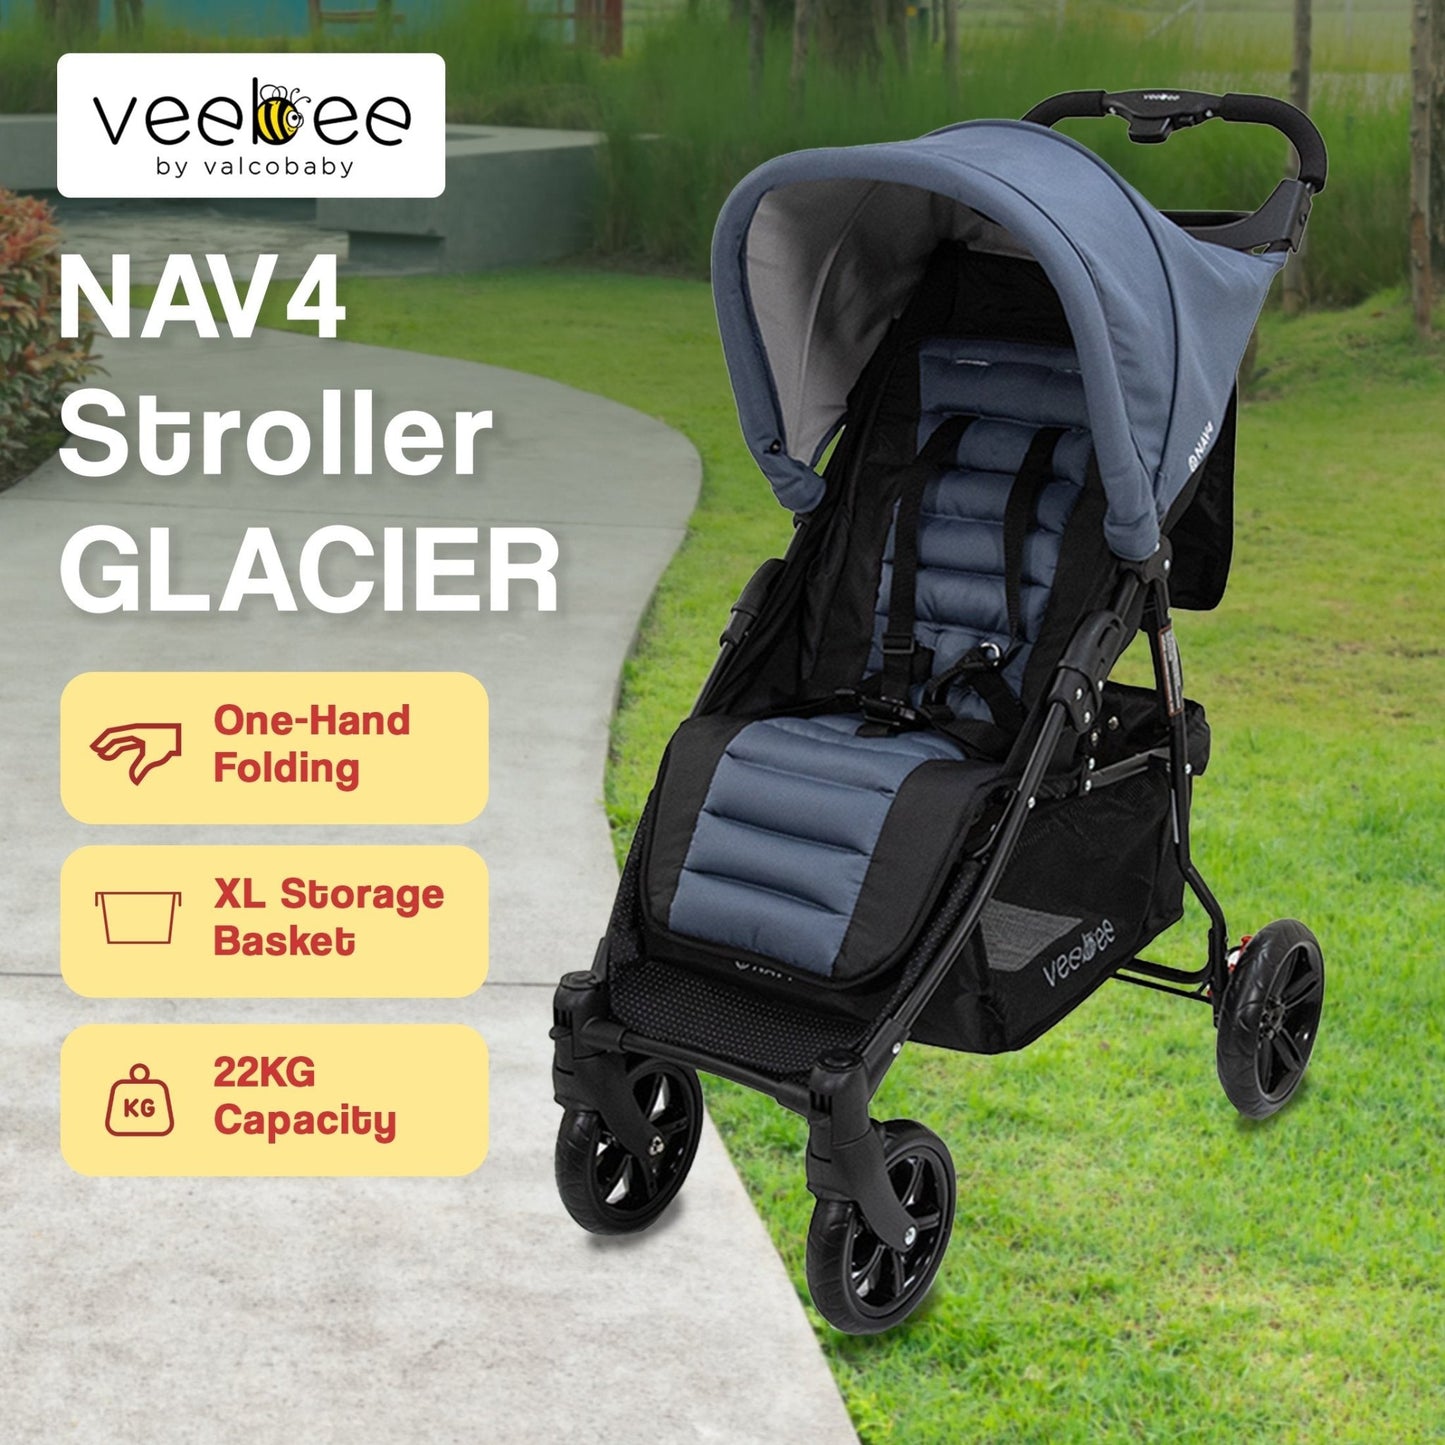 Veebee Nav 4 Stroller Lightweight Pram For Newborns To Toddlers - Glacie - Little Kids Business